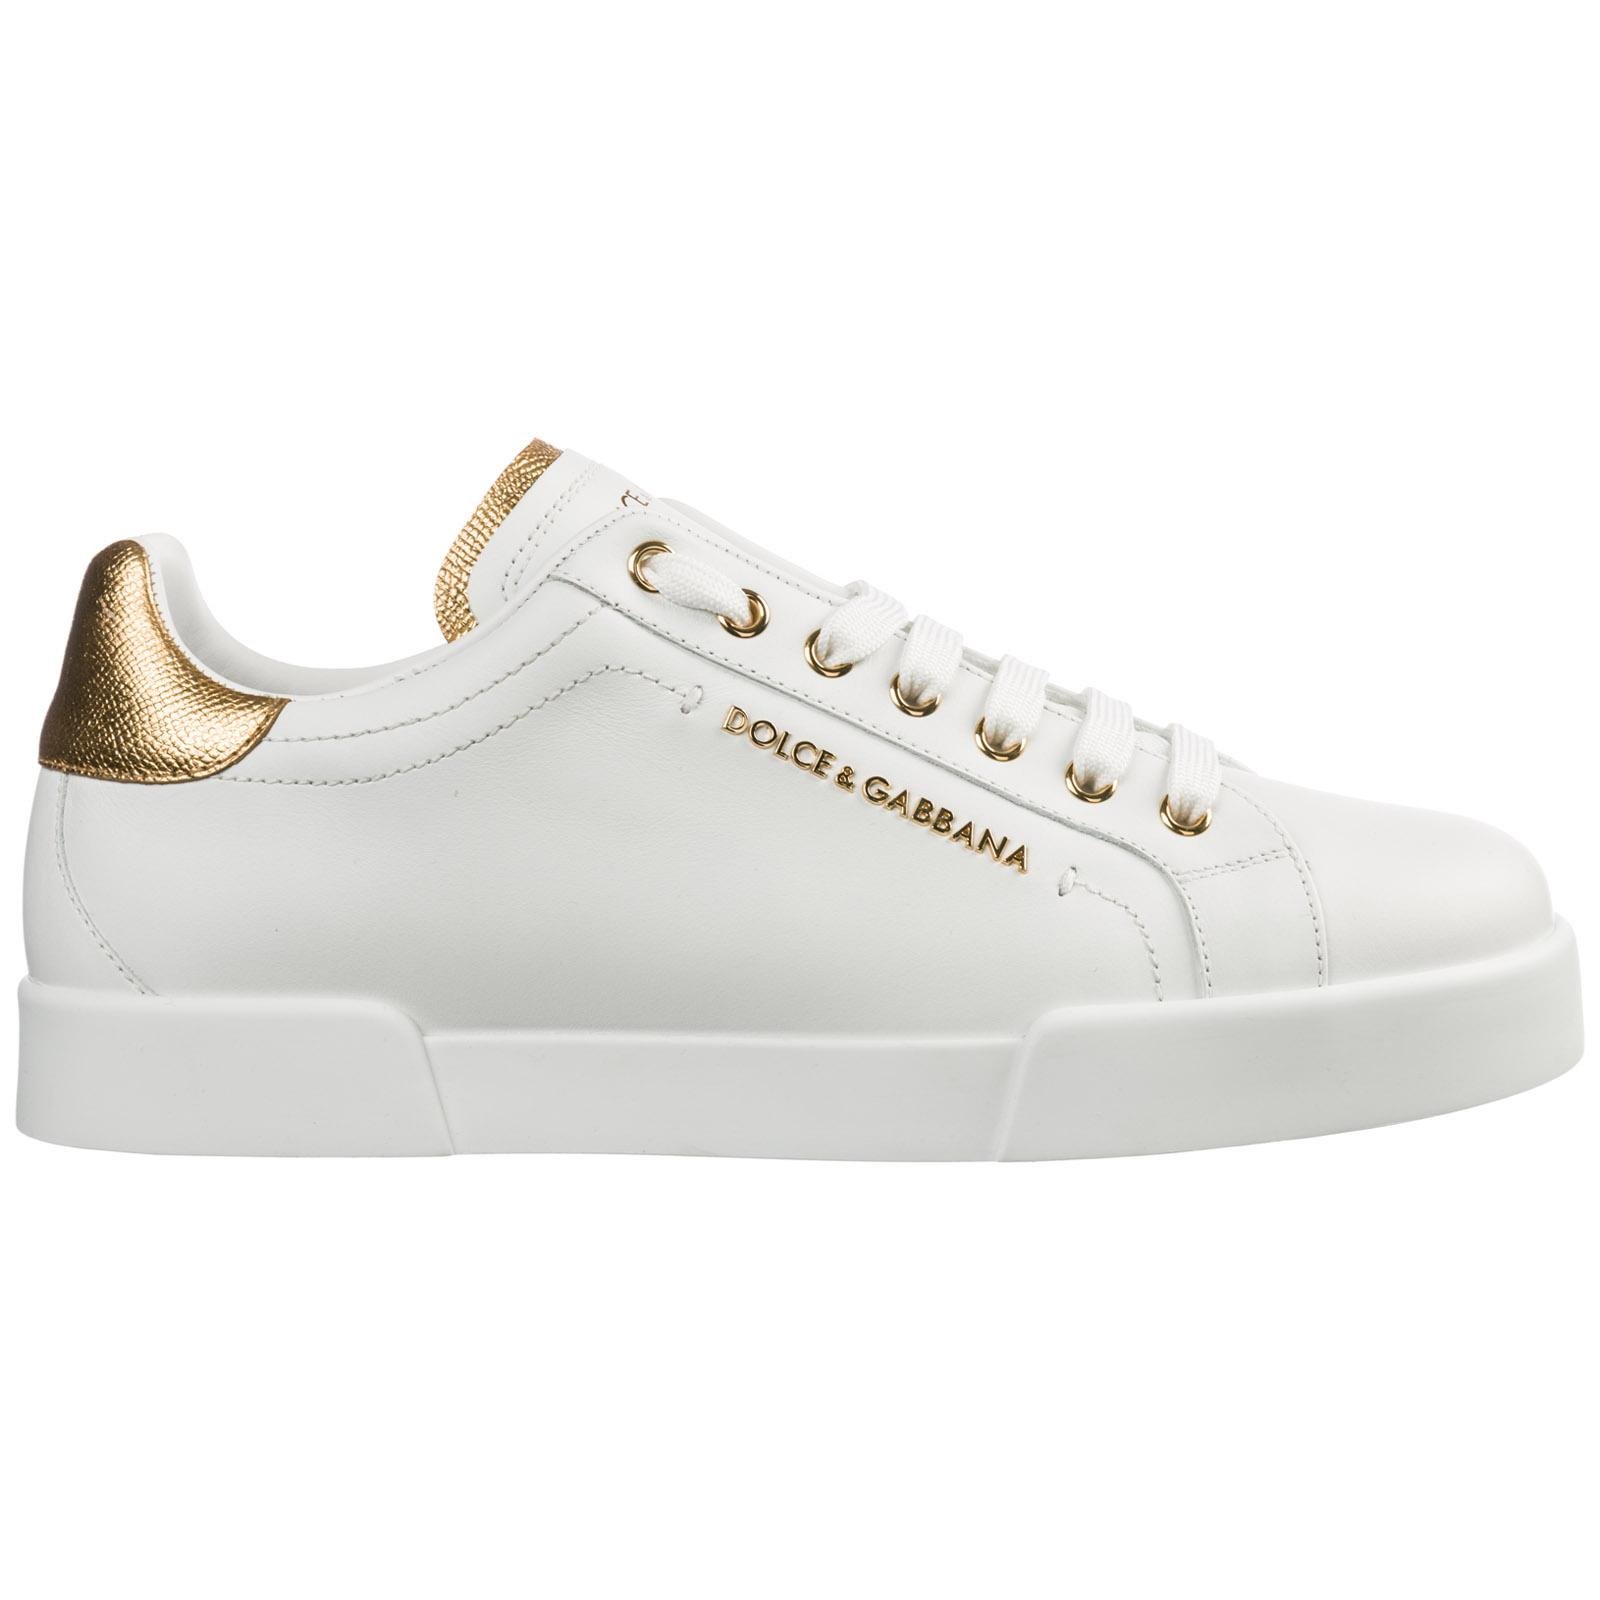 Dolce & Gabbana Men's Shoes Leather Trainers Sneakers Portofino Light ...